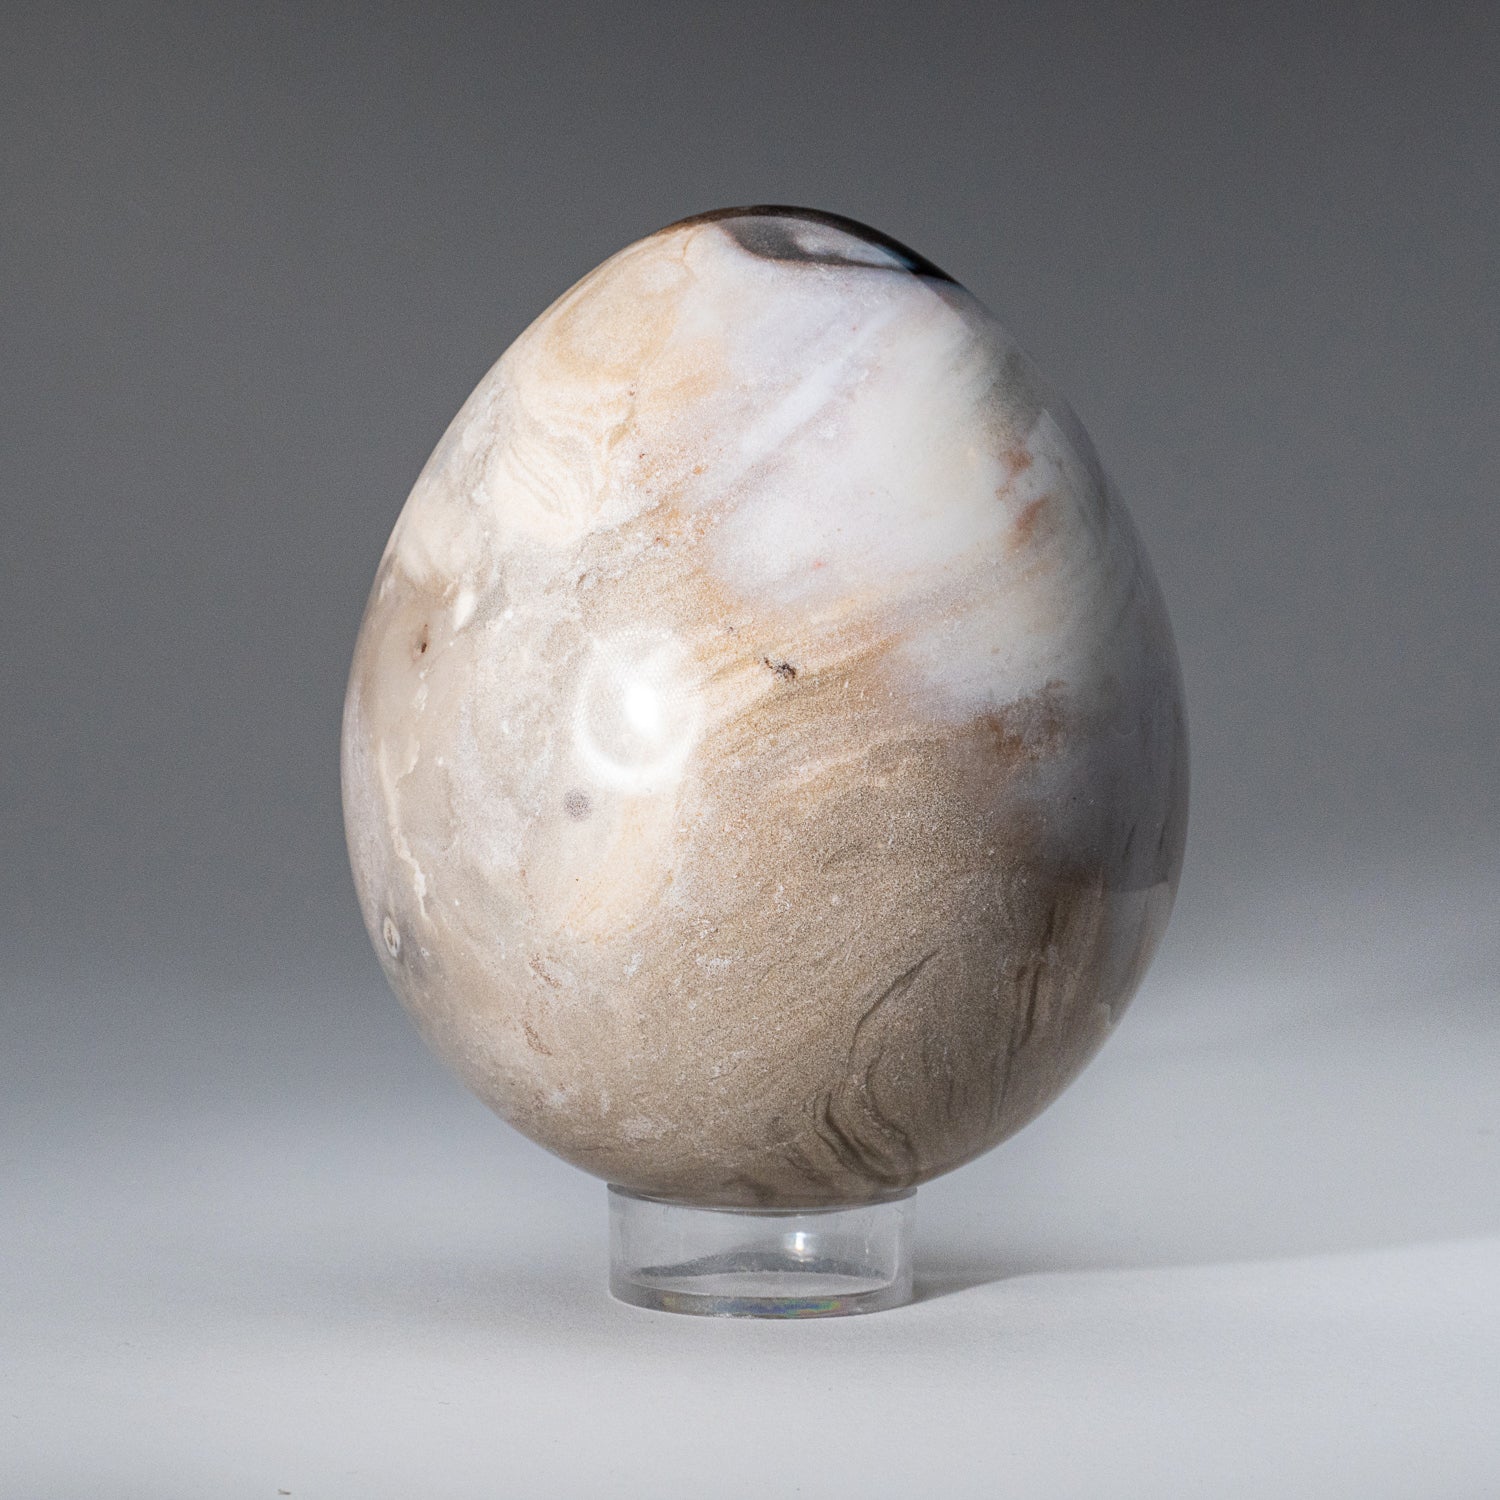 Polished Petrified Wood Egg from Madagascar (2.2 lbs)